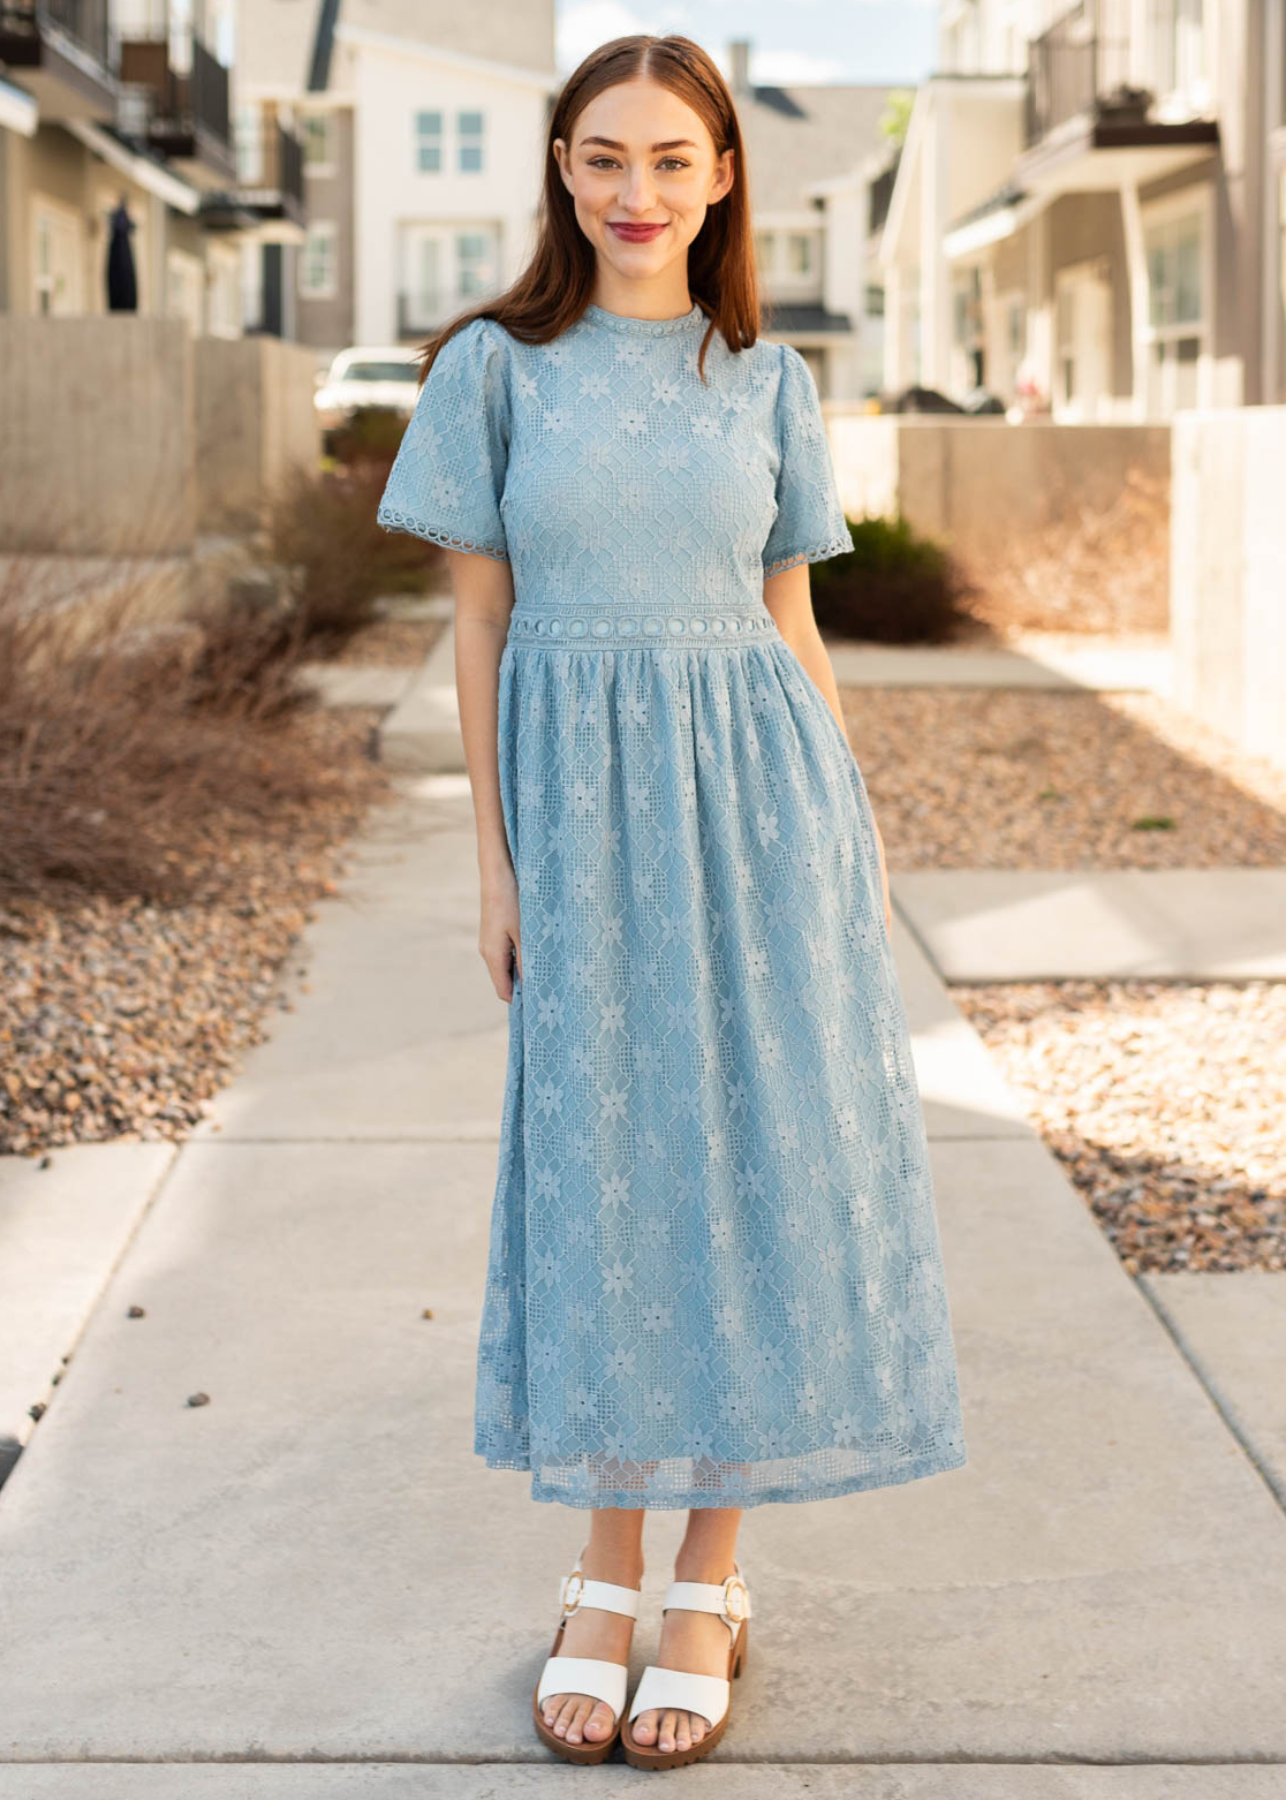 Short sleeve dusty blue corded lace dress